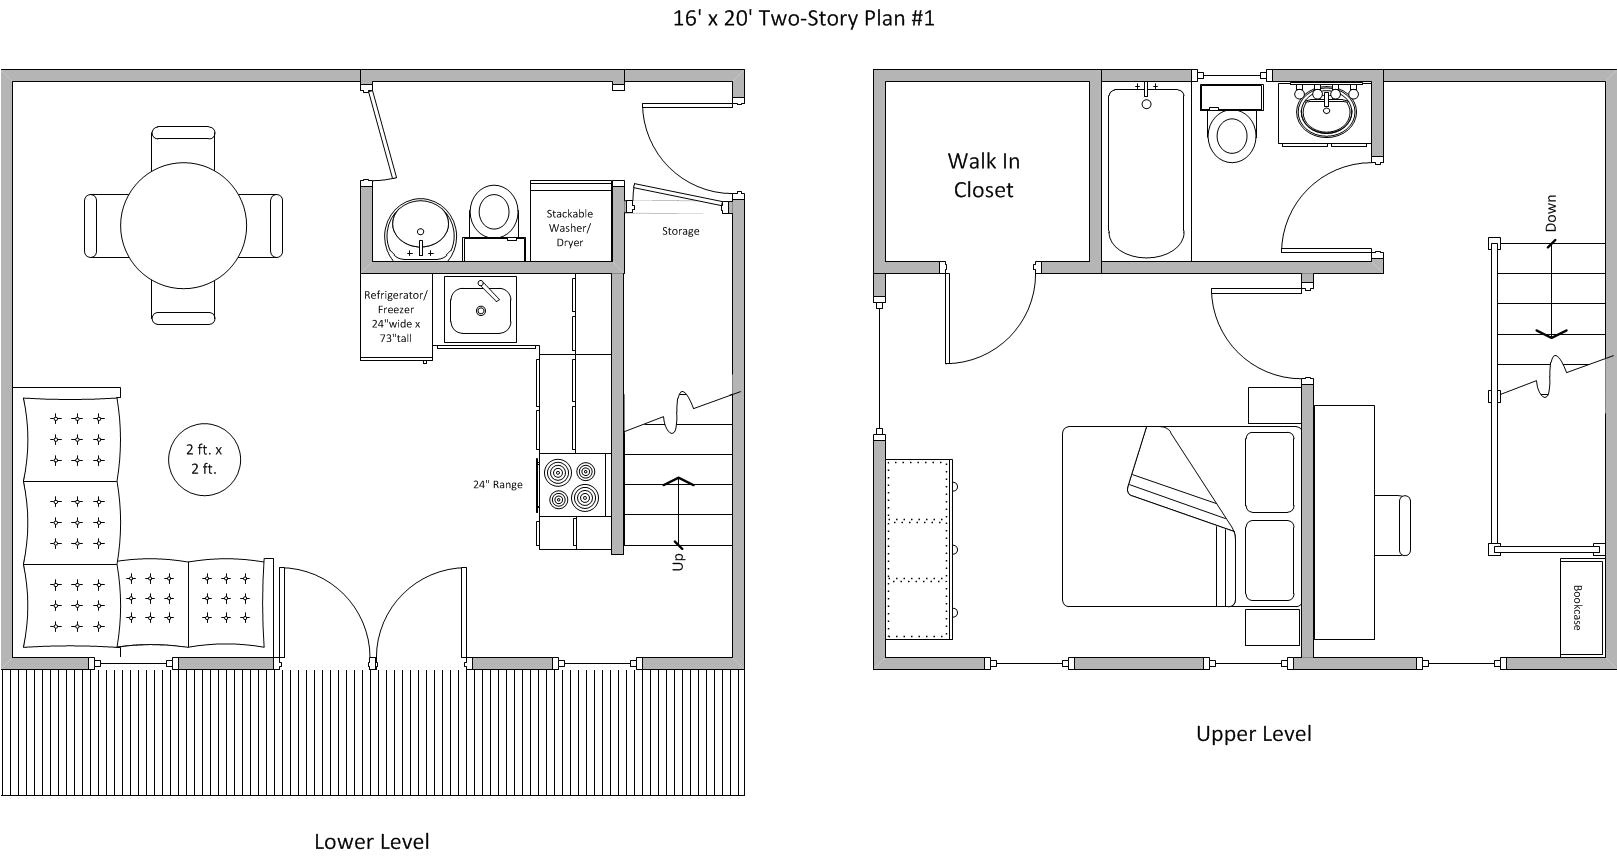 Micro House Plans. Стильный дизайн план схема базы отдыха. Plans 2nd Floor 20x10 Meters. Plan 1 story. Planned walks